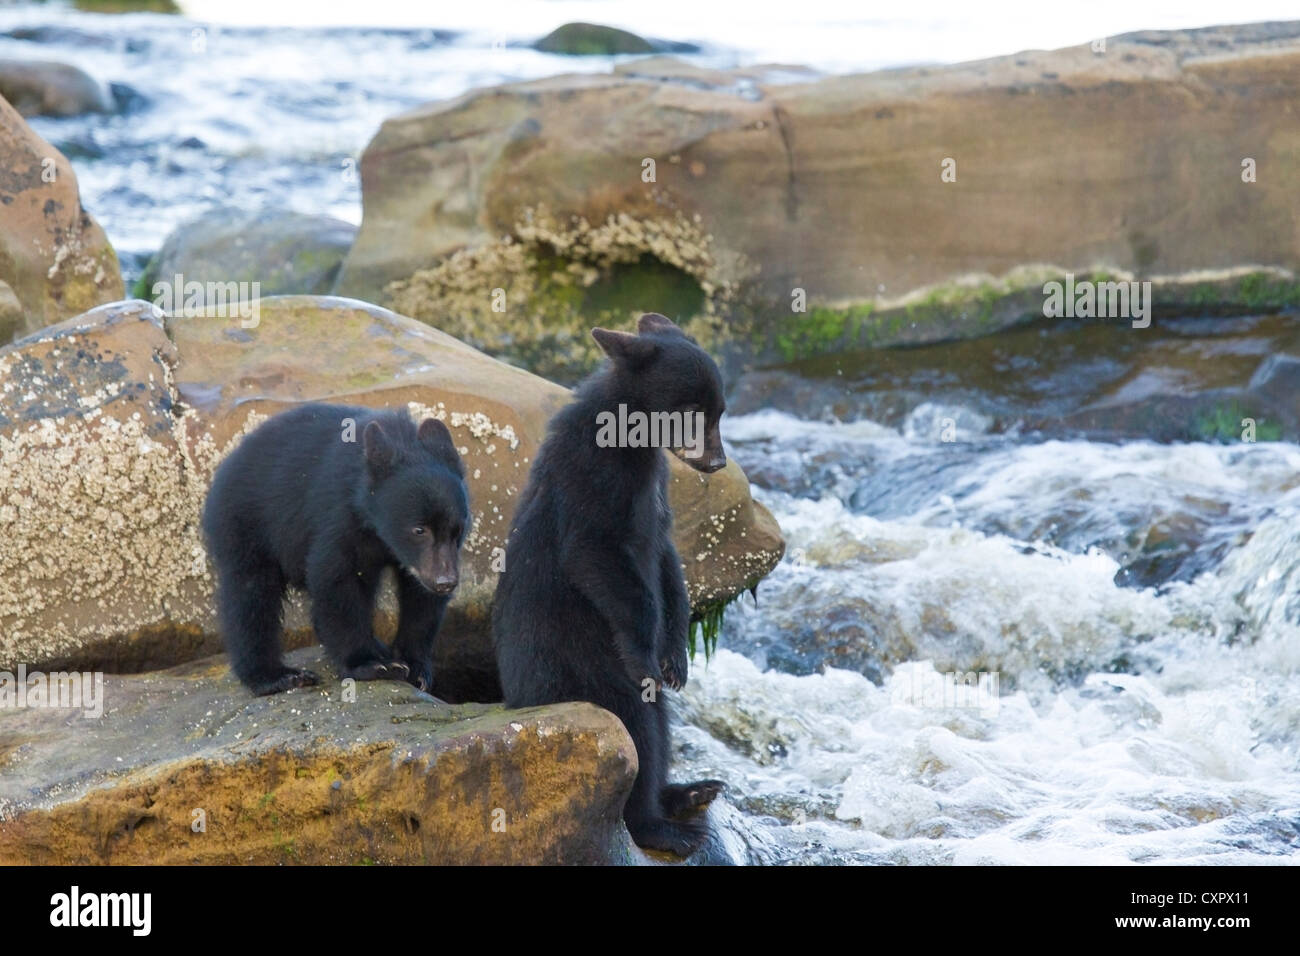 Zwei junge schwarze Bärenjungen lernen, an einem Wasserfall an der Mündung des Flusses Vancouver Island Kanada Keogh Fisch Stockfoto